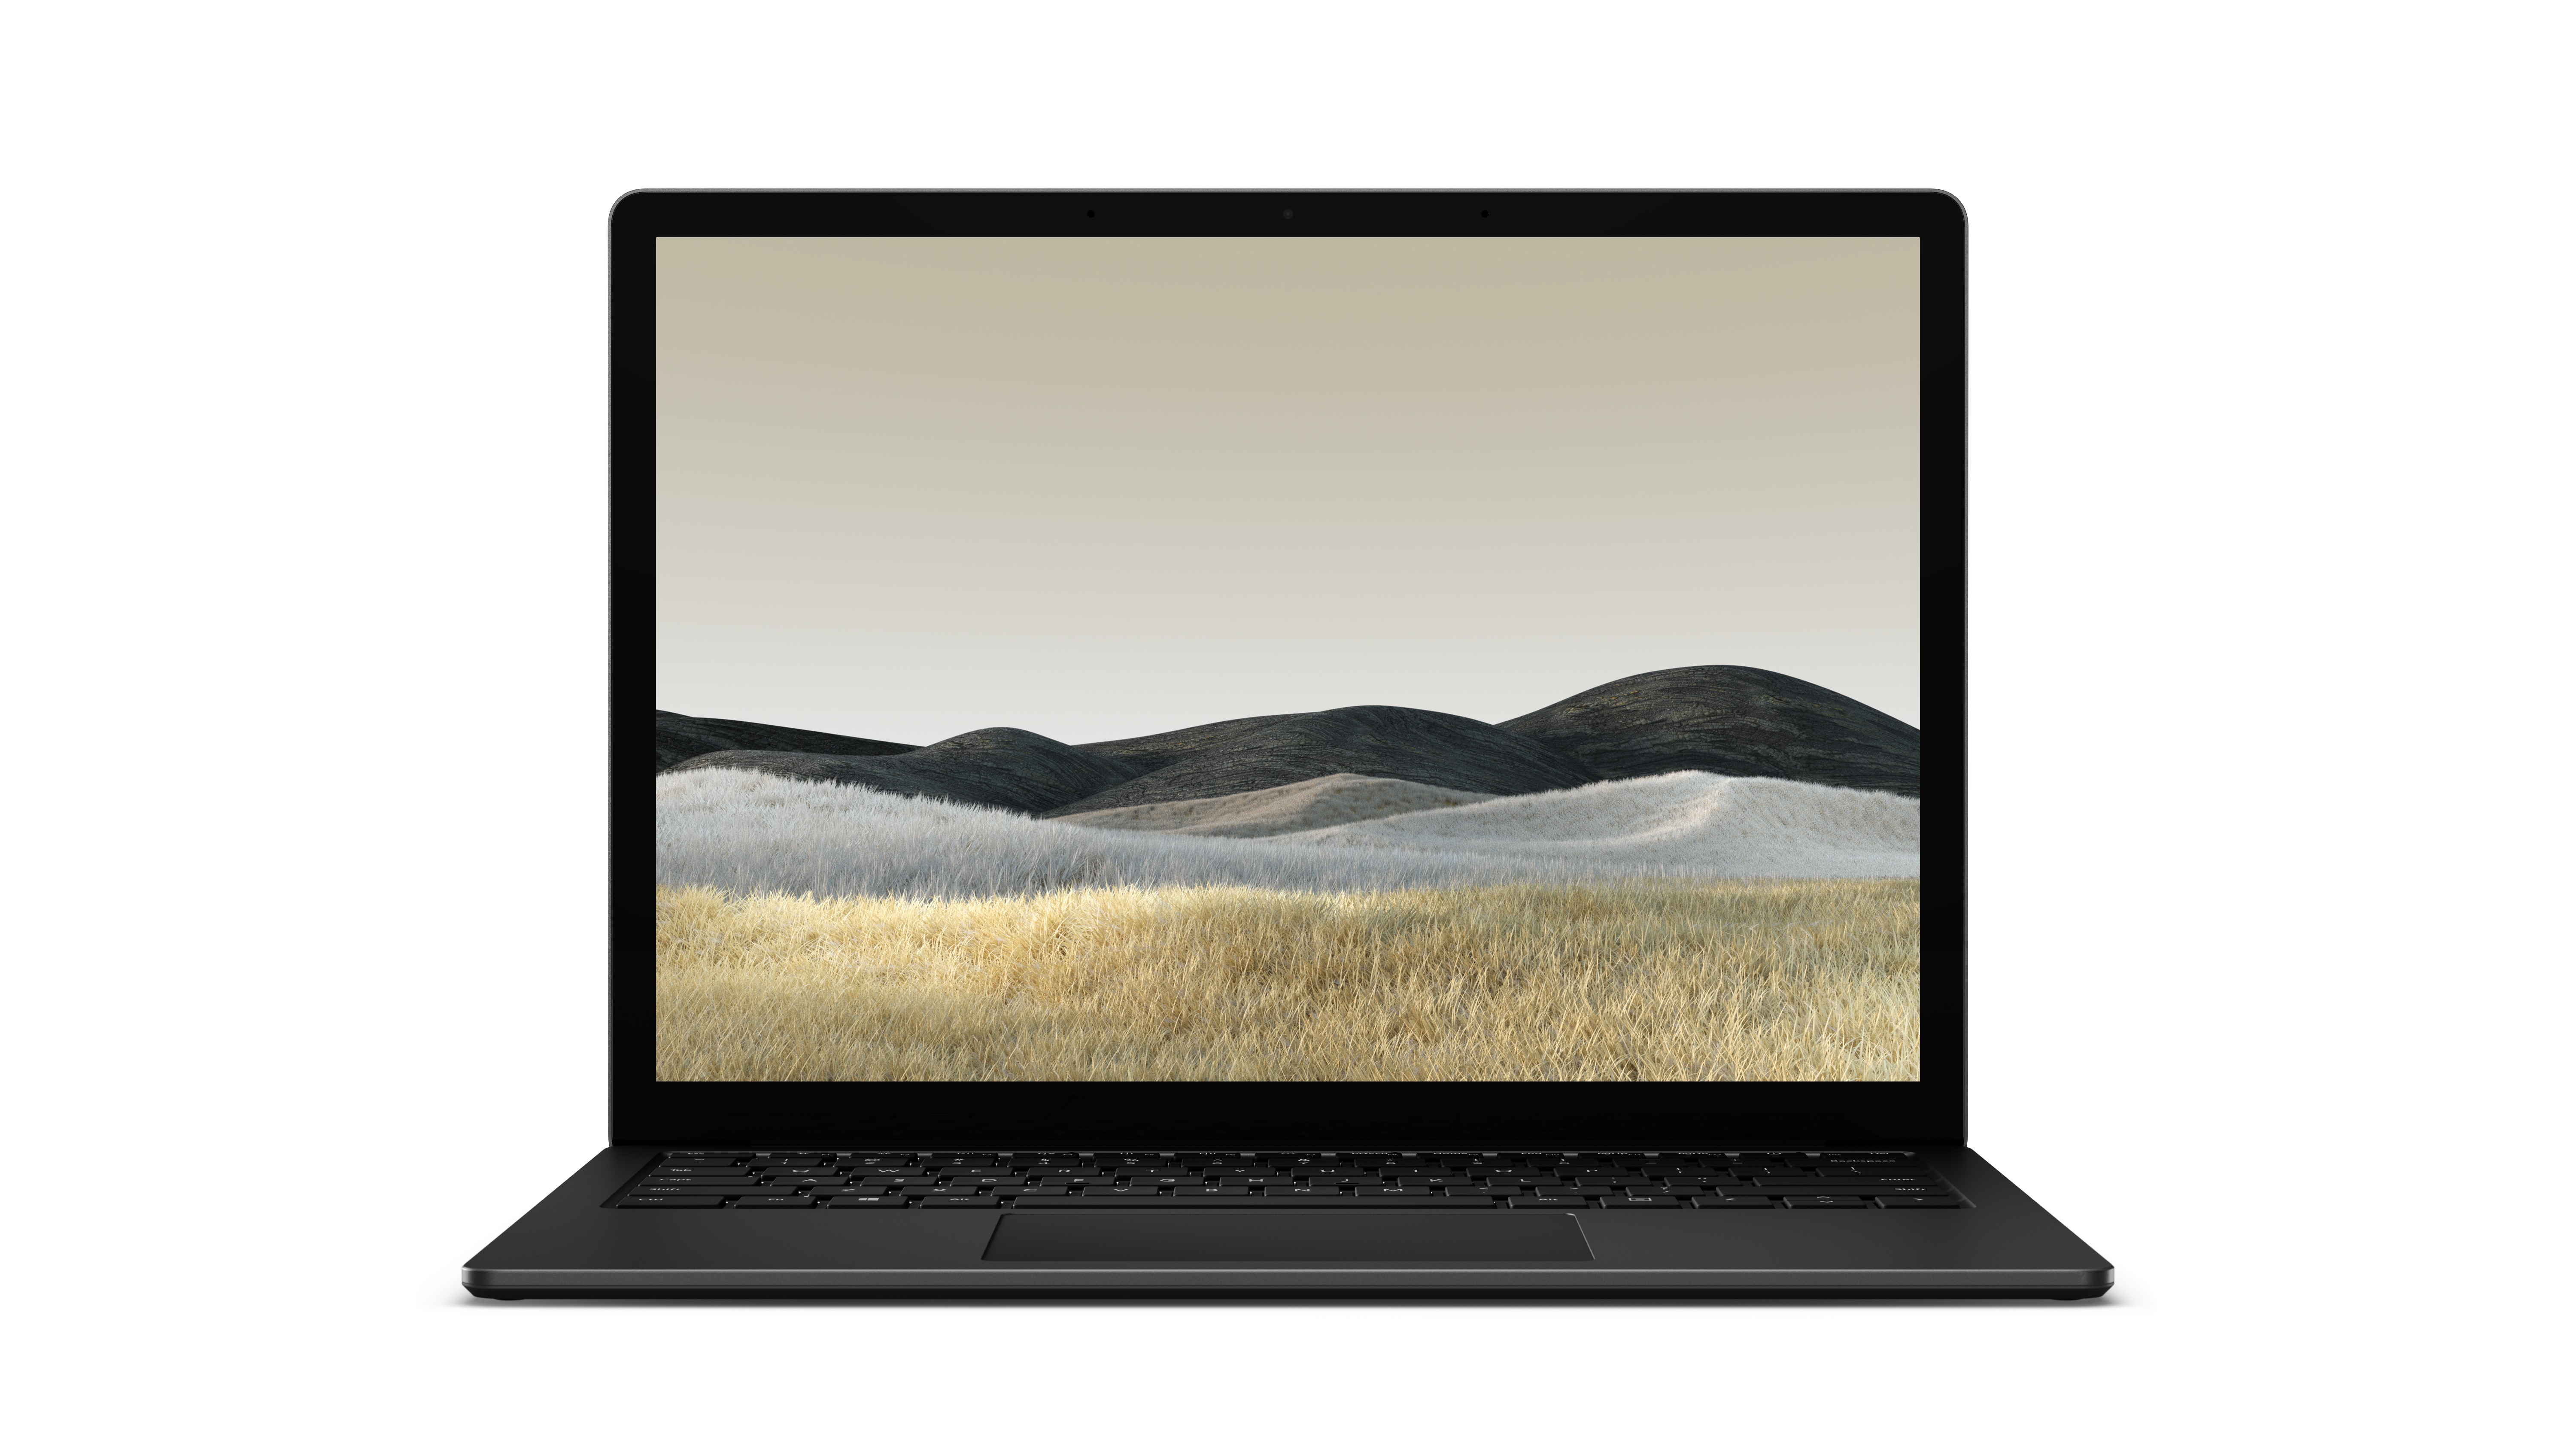 Microsoft Surface Laptop 3, 13.5" Touch-Screen, Intel Core i7-1035G7, 16GB Memory, 256GB SSD, Iris Plus Graphics 950, Windows 10 Home, Matte Black, VEF-00022 - image 2 of 6